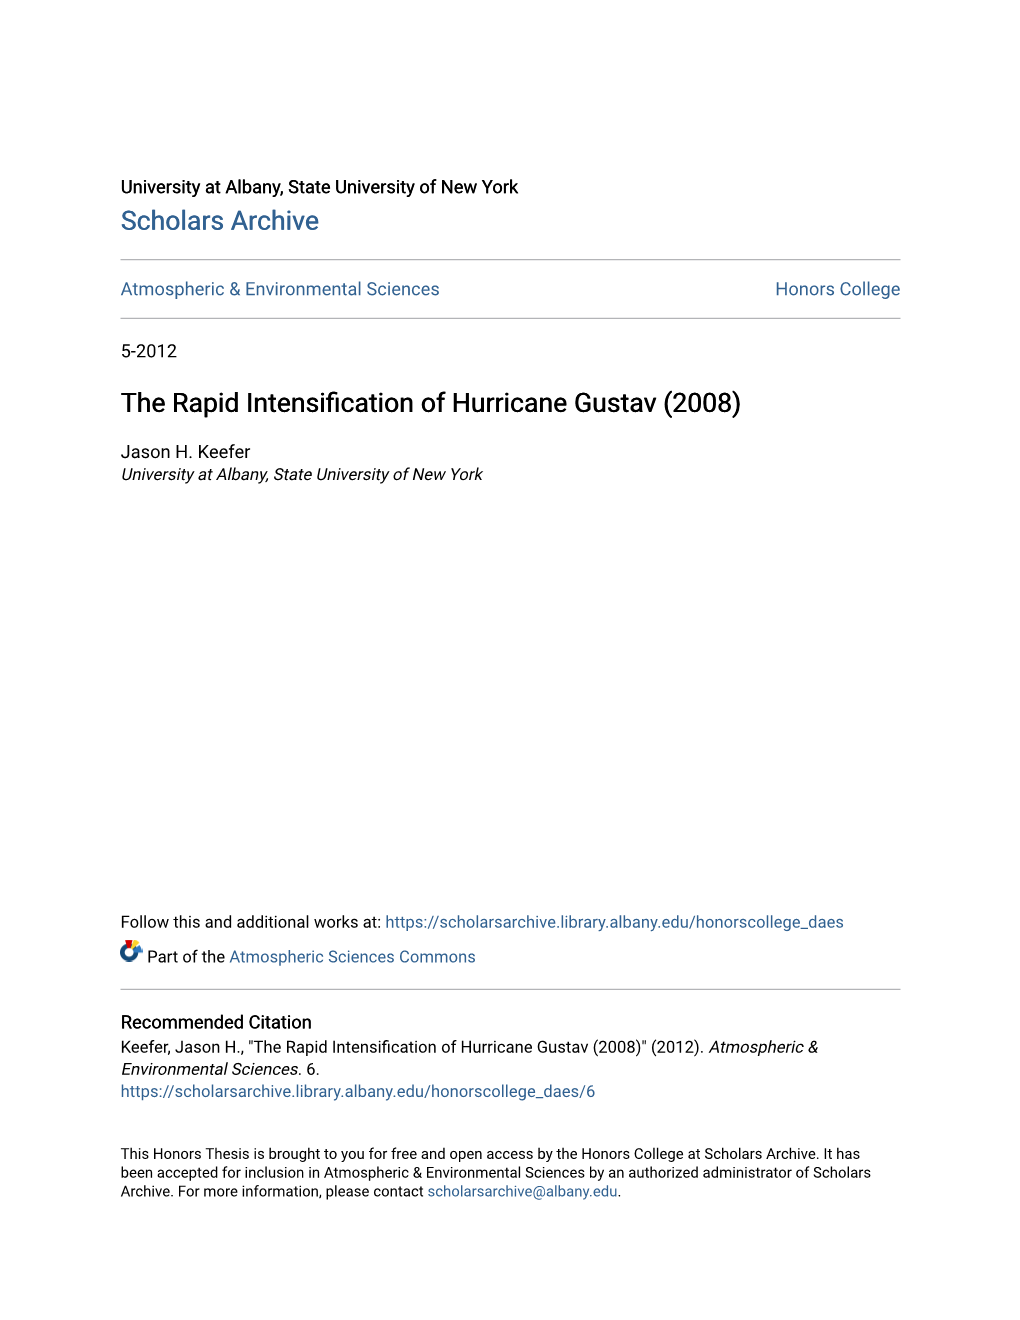 The Rapid Intensification of Hurricane Gustav (2008)